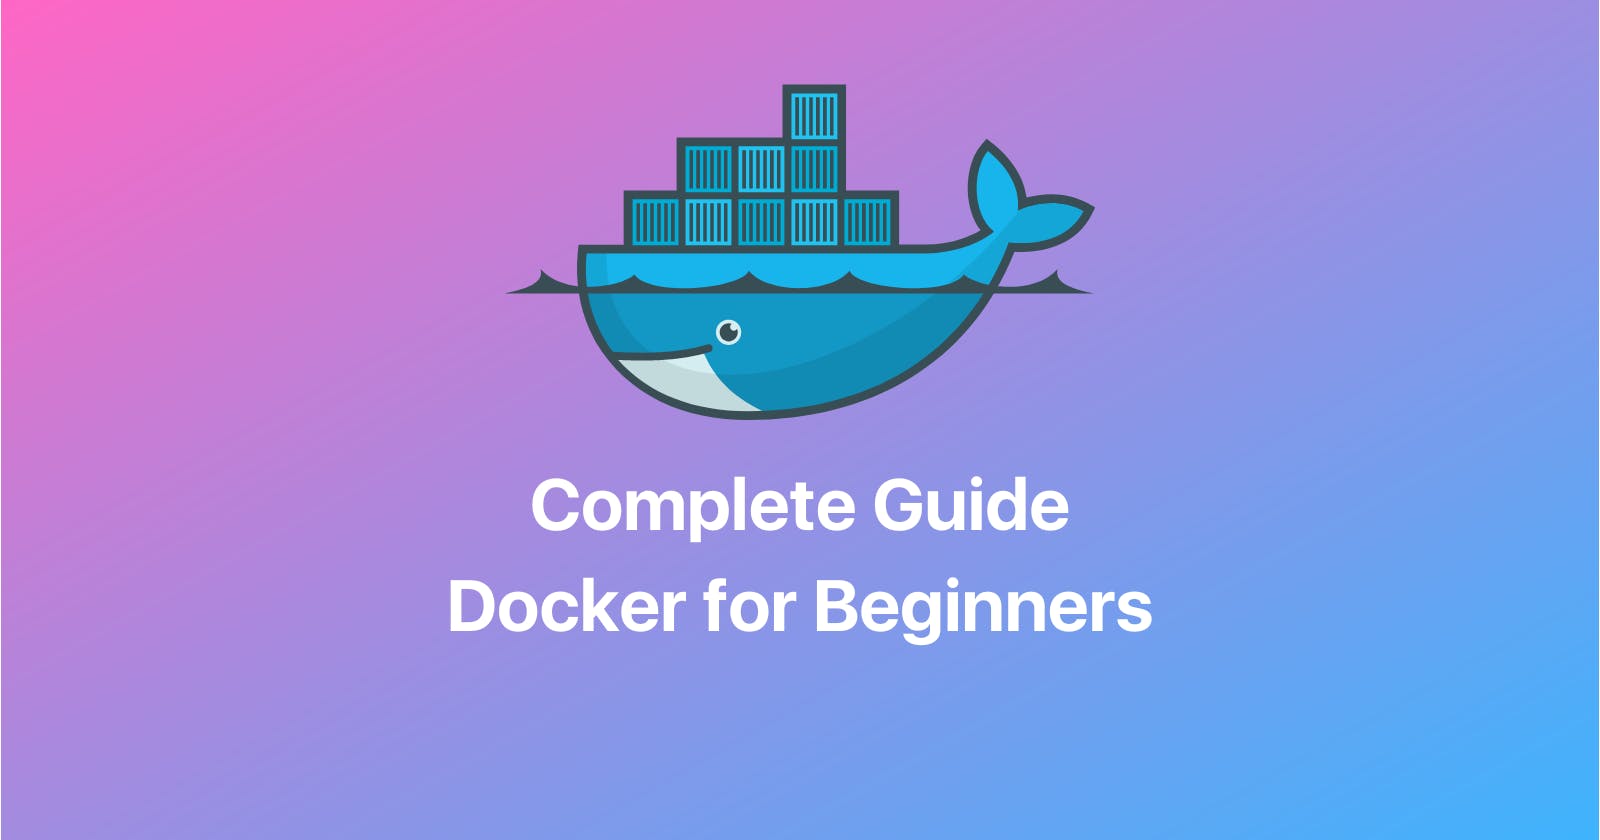 Complete Guide on Docker for Beginners